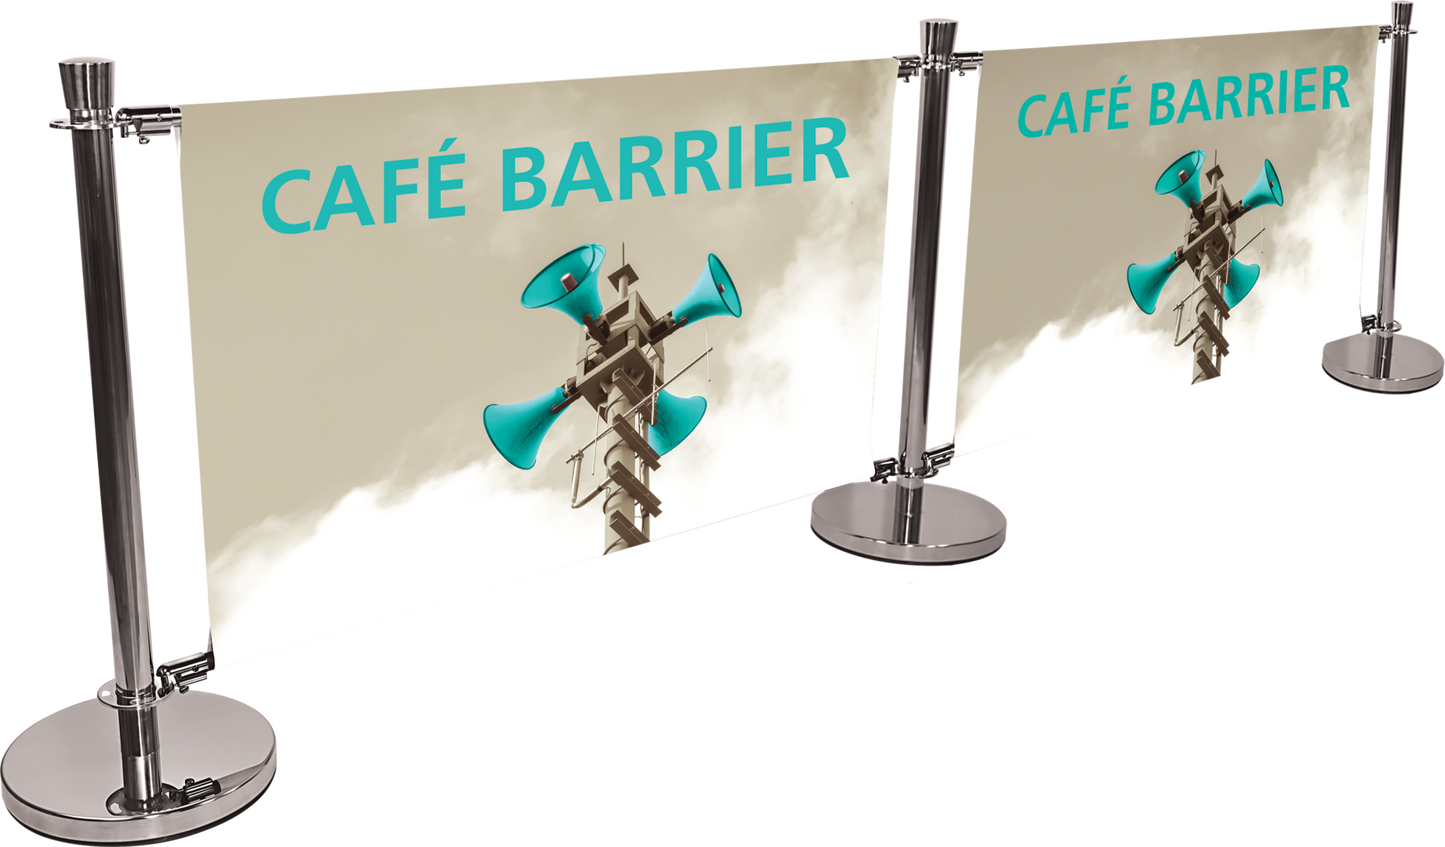 Cafe Barrier Indoor/Outdoor Banner Stand System (Hardware Only)